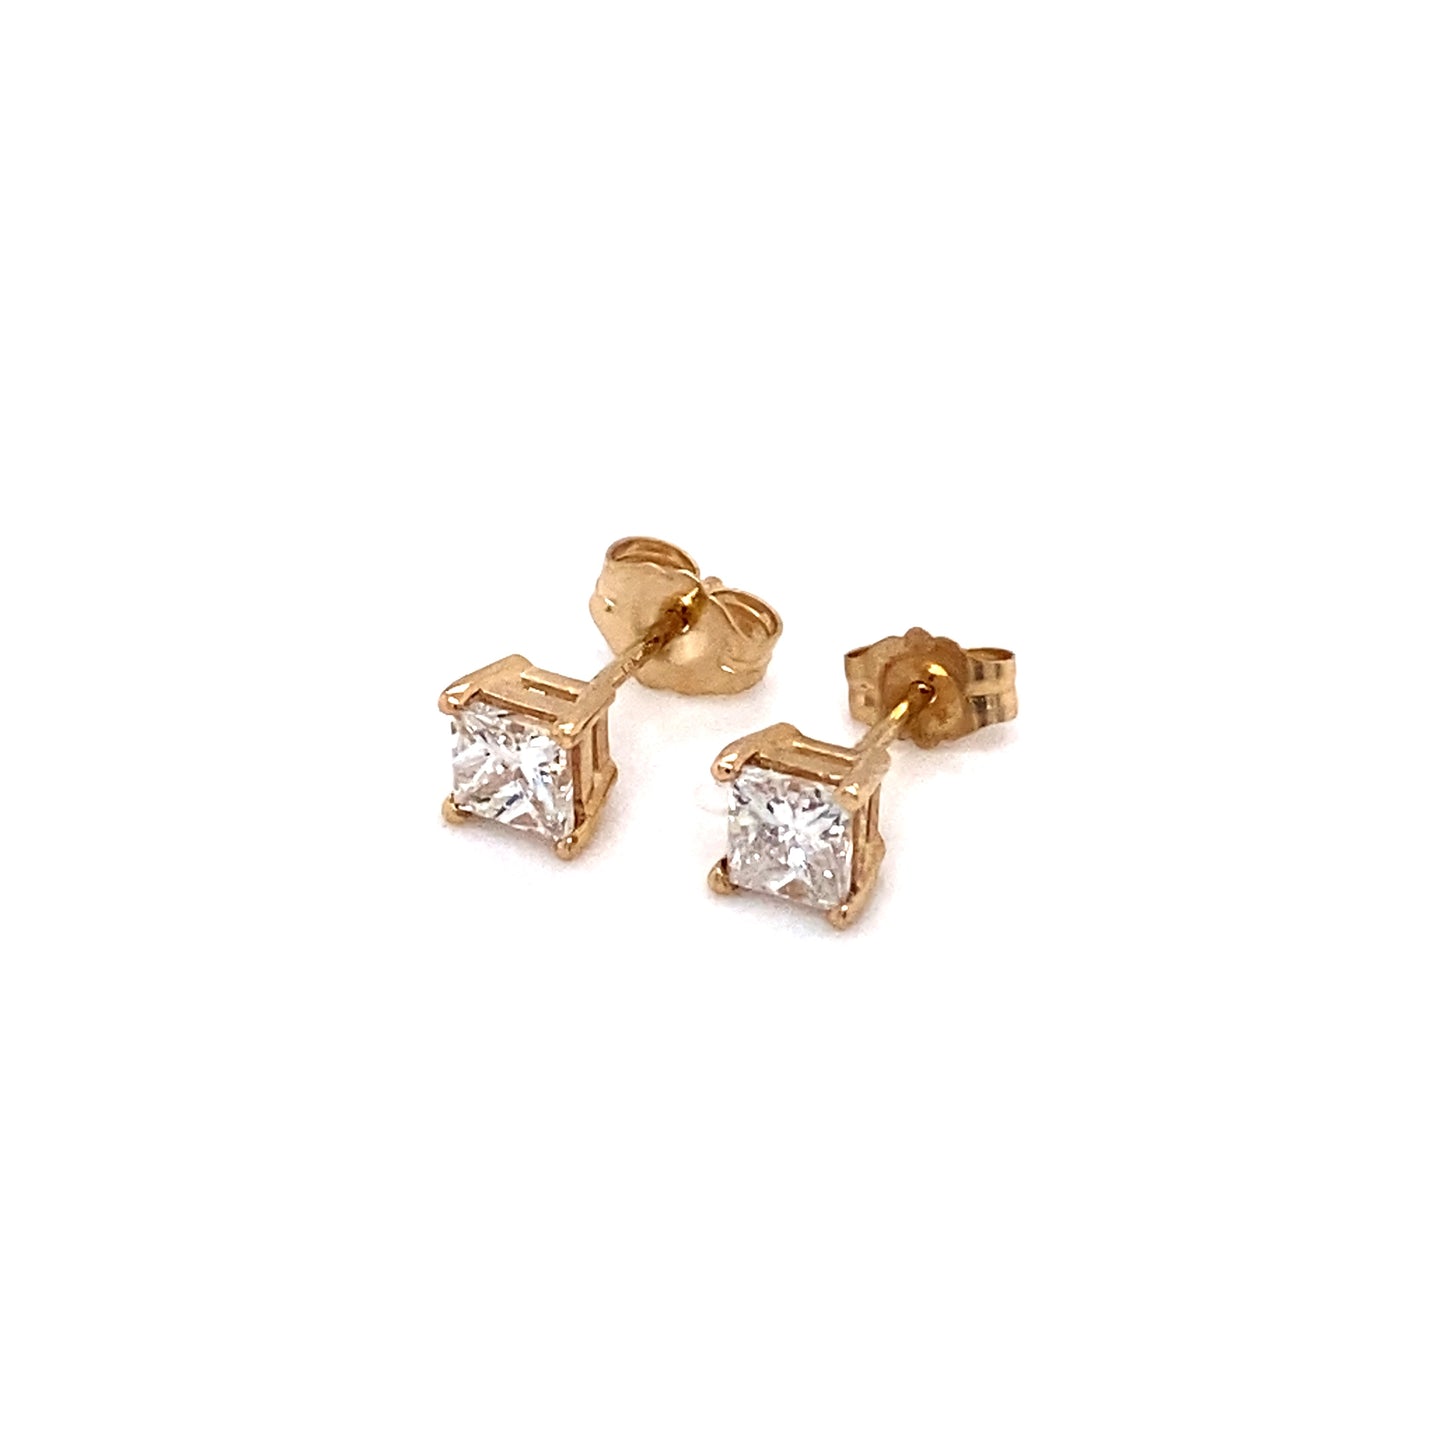 Circa 1990 0.75 Carat Princess Cut Diamond Stud Earrings in 14K Gold